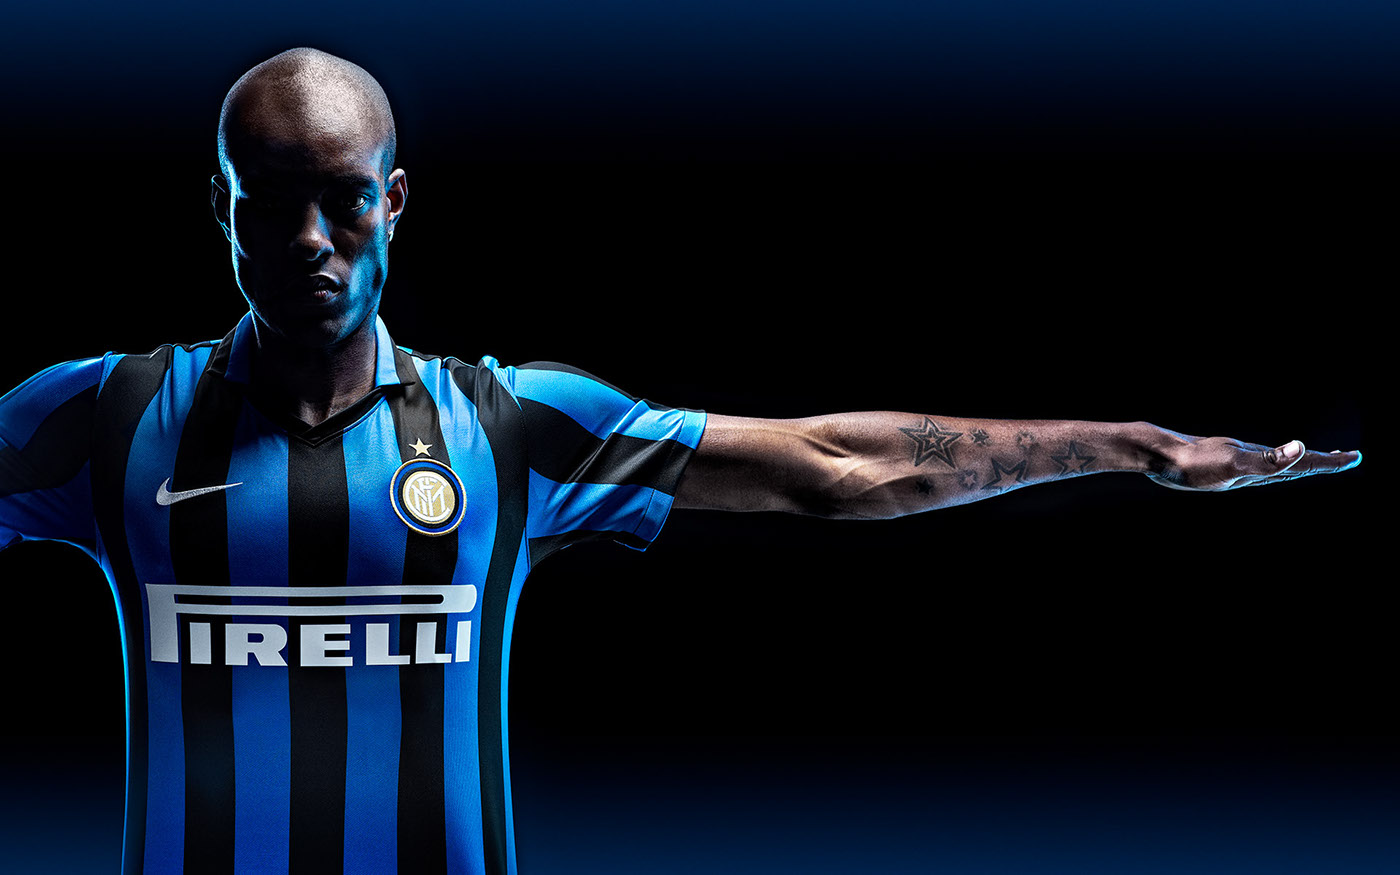 Serie A football retouching  creative Nike Image manipulation Advertising 